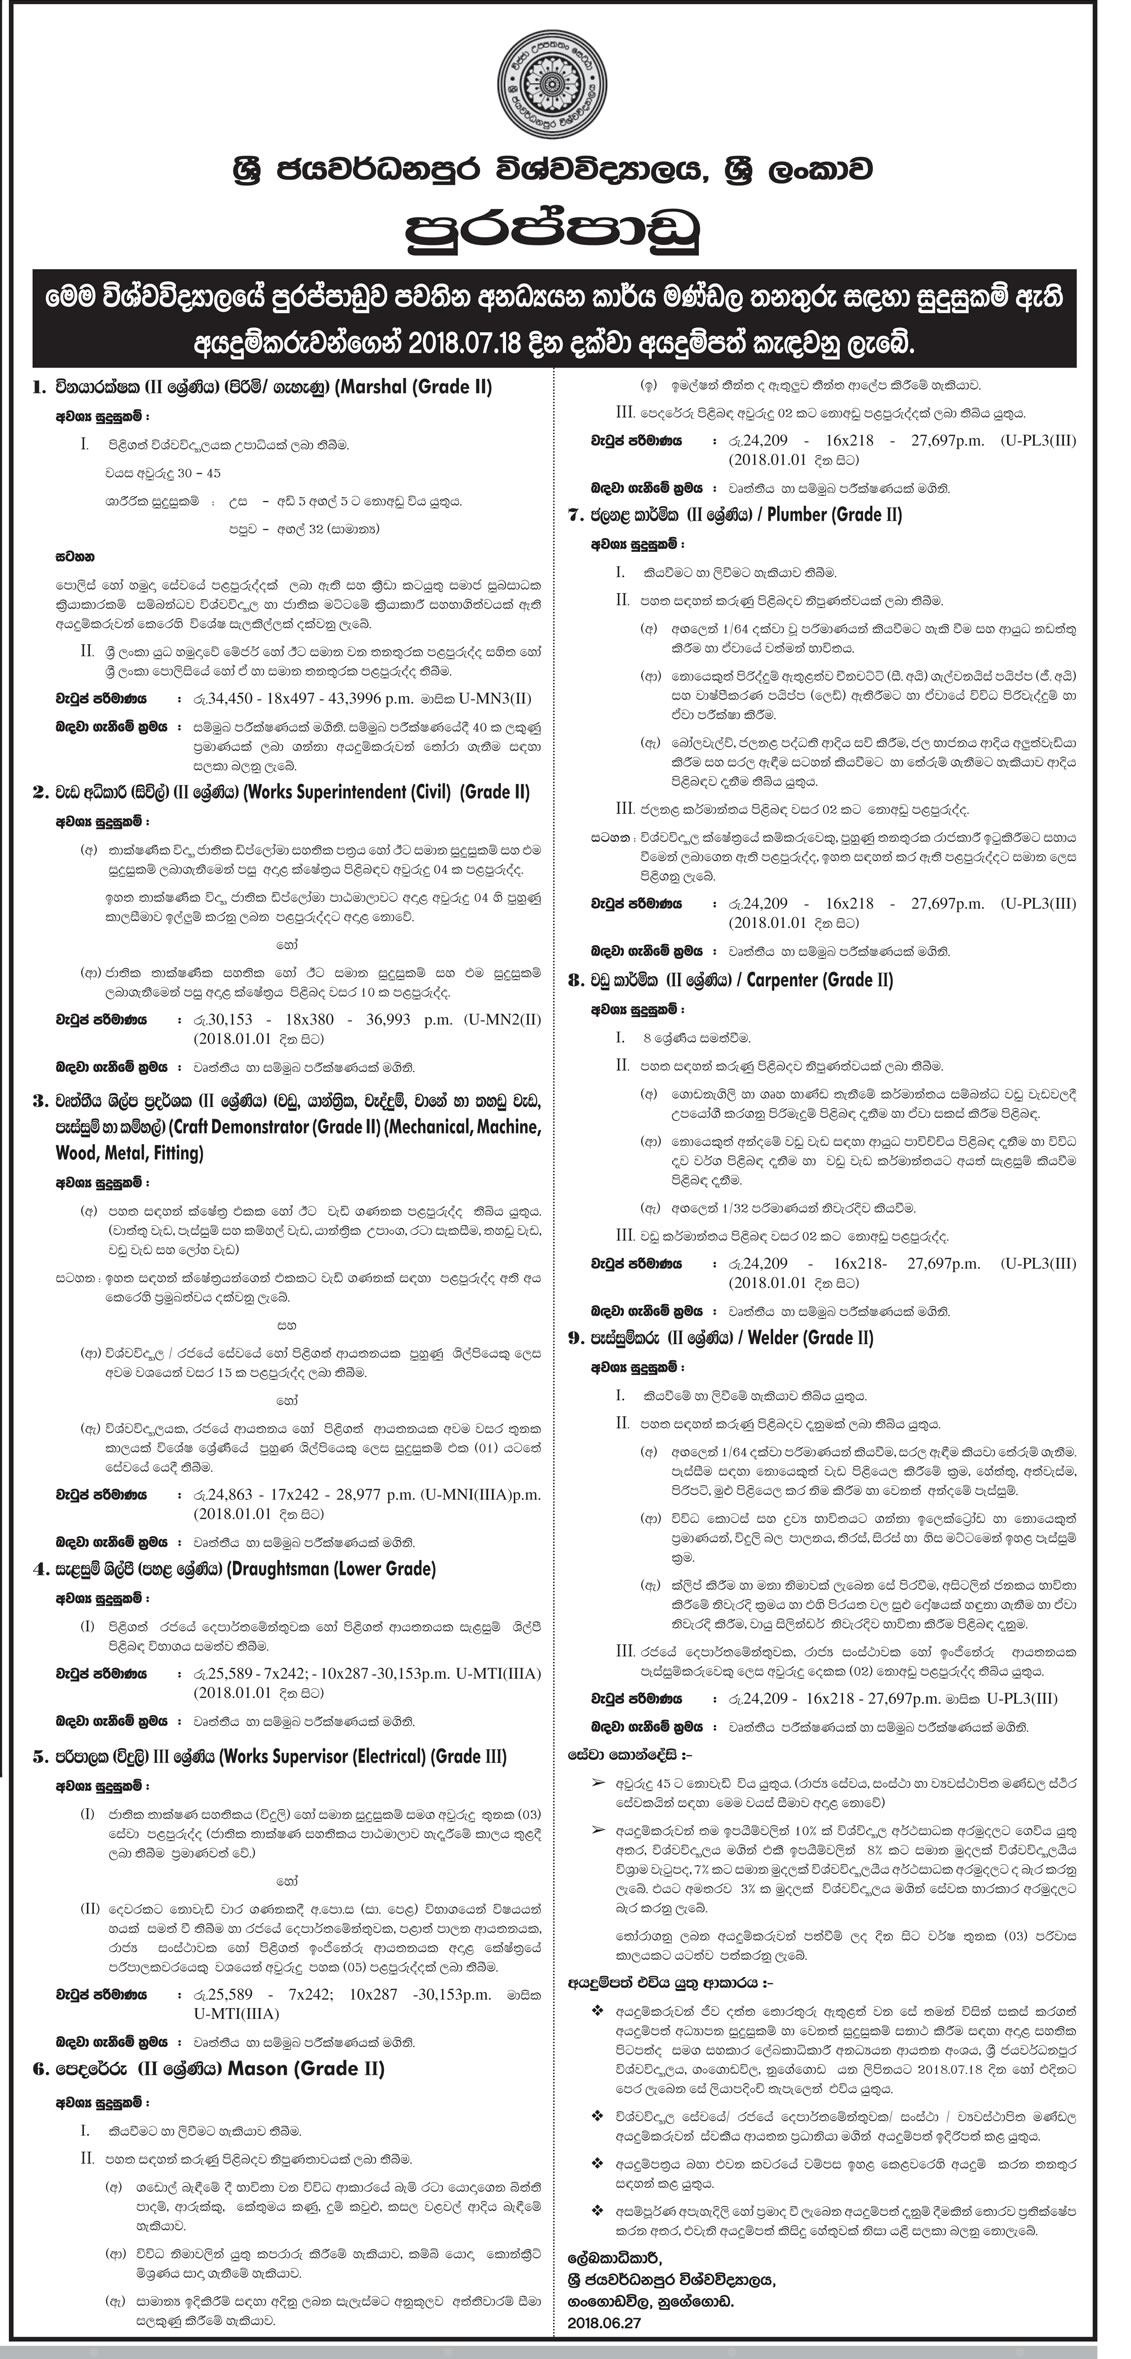 Marshal / Mason / Plumber / Carpenter / Welder - University of Sri Jayewardenepura Jobs Vacancies